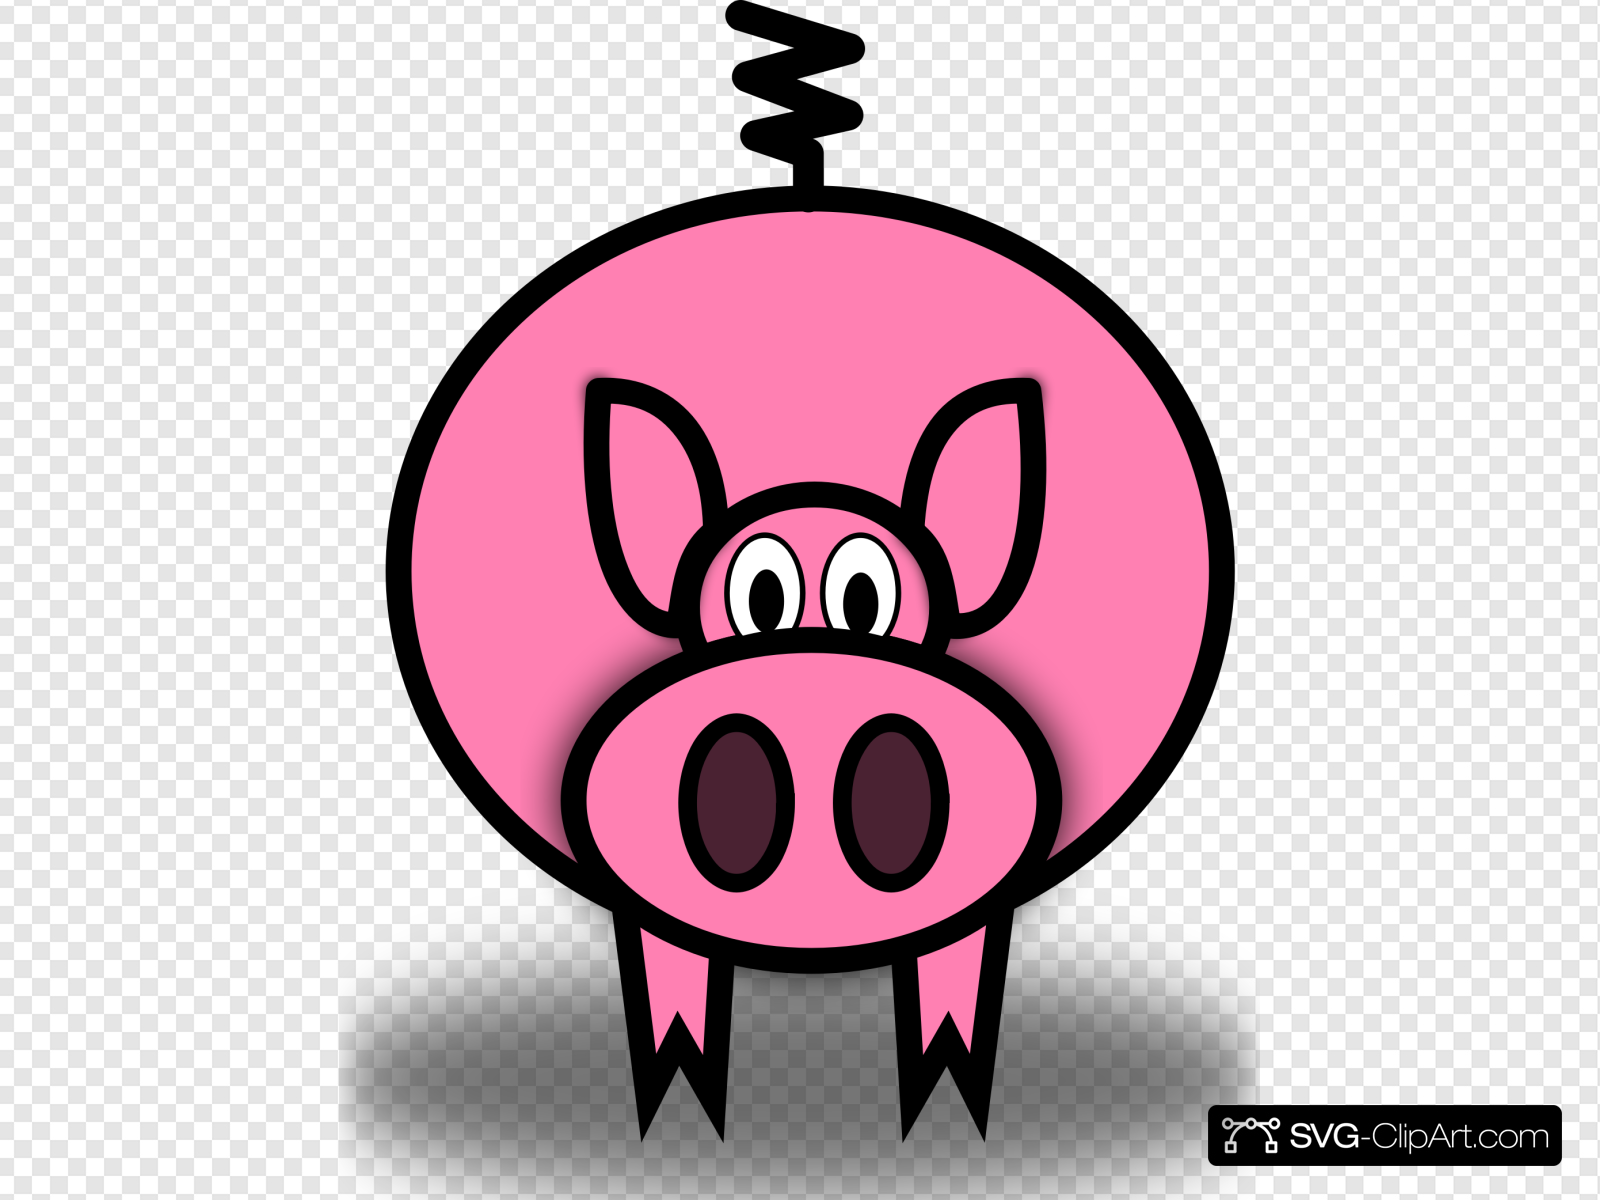 Simple cartoon pig.